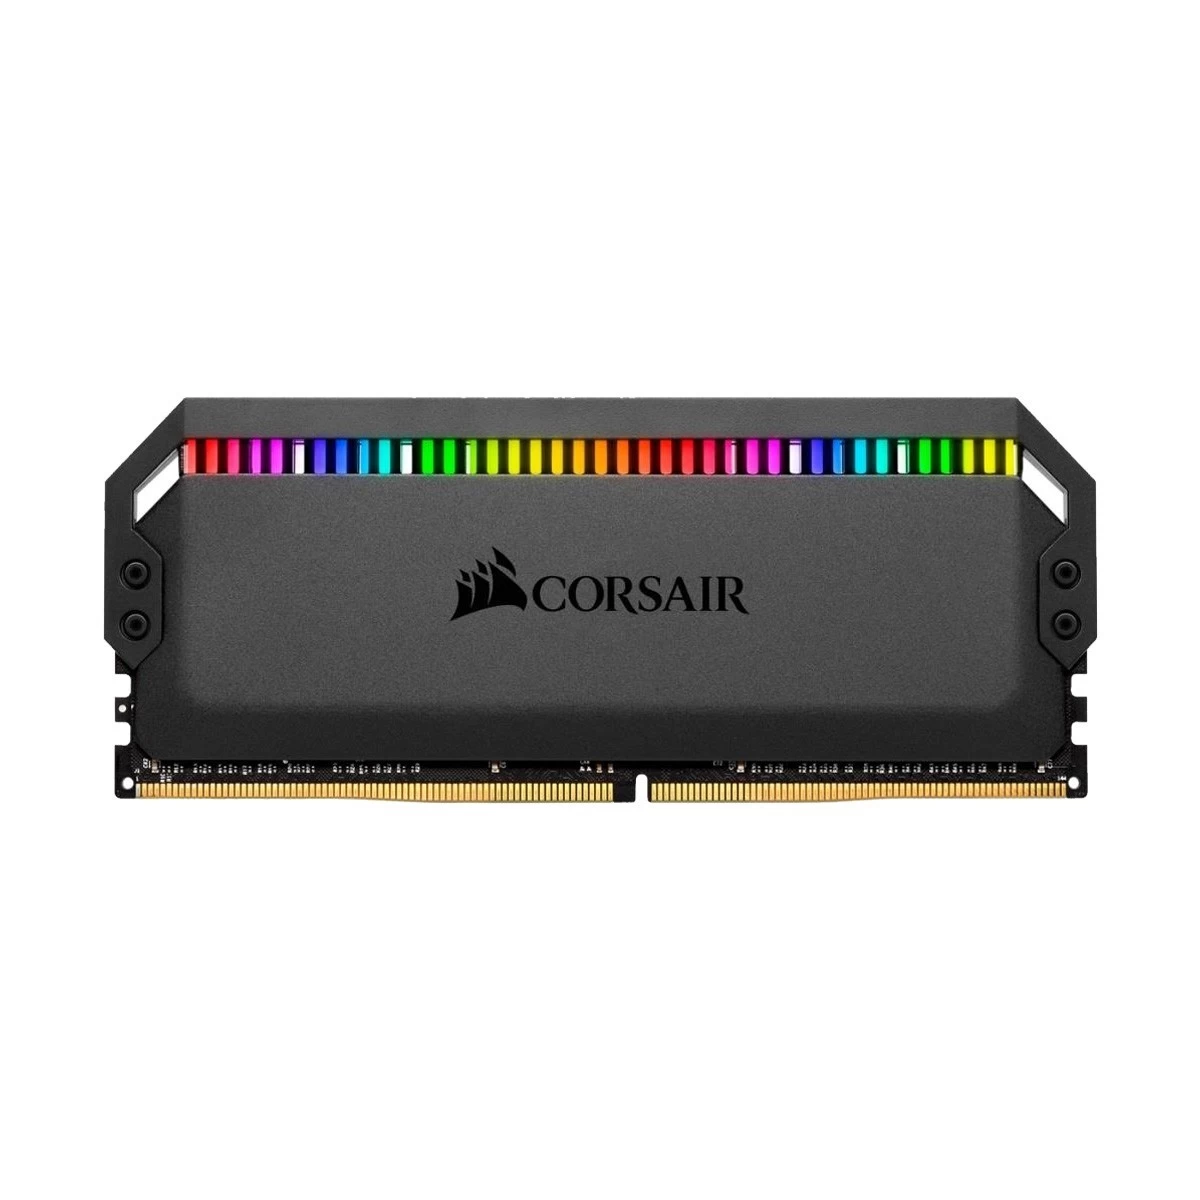 Corsair Dominator Platinum RGB 16GB DDR4 3200MHz Gaming Desktop RAM